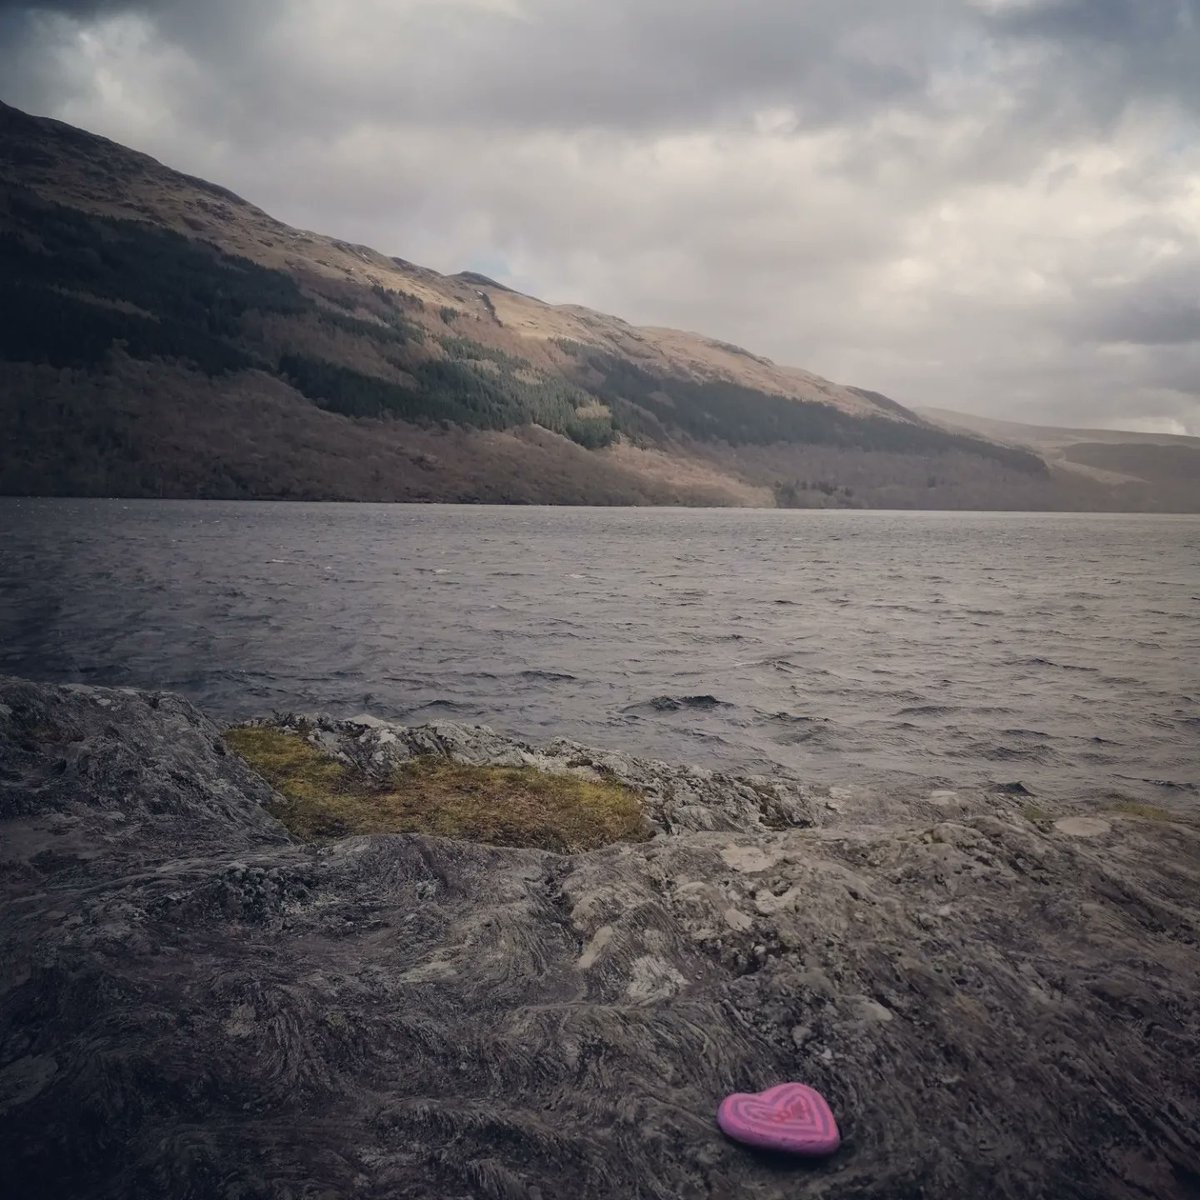 Some positivity stones have been left at Loch Lomand today 🦋 #evelynsbutterflyeffect #positivitystones #randomactsofkindness #payitforward #sprinklekindnesslikeglitter #growkindness❤️